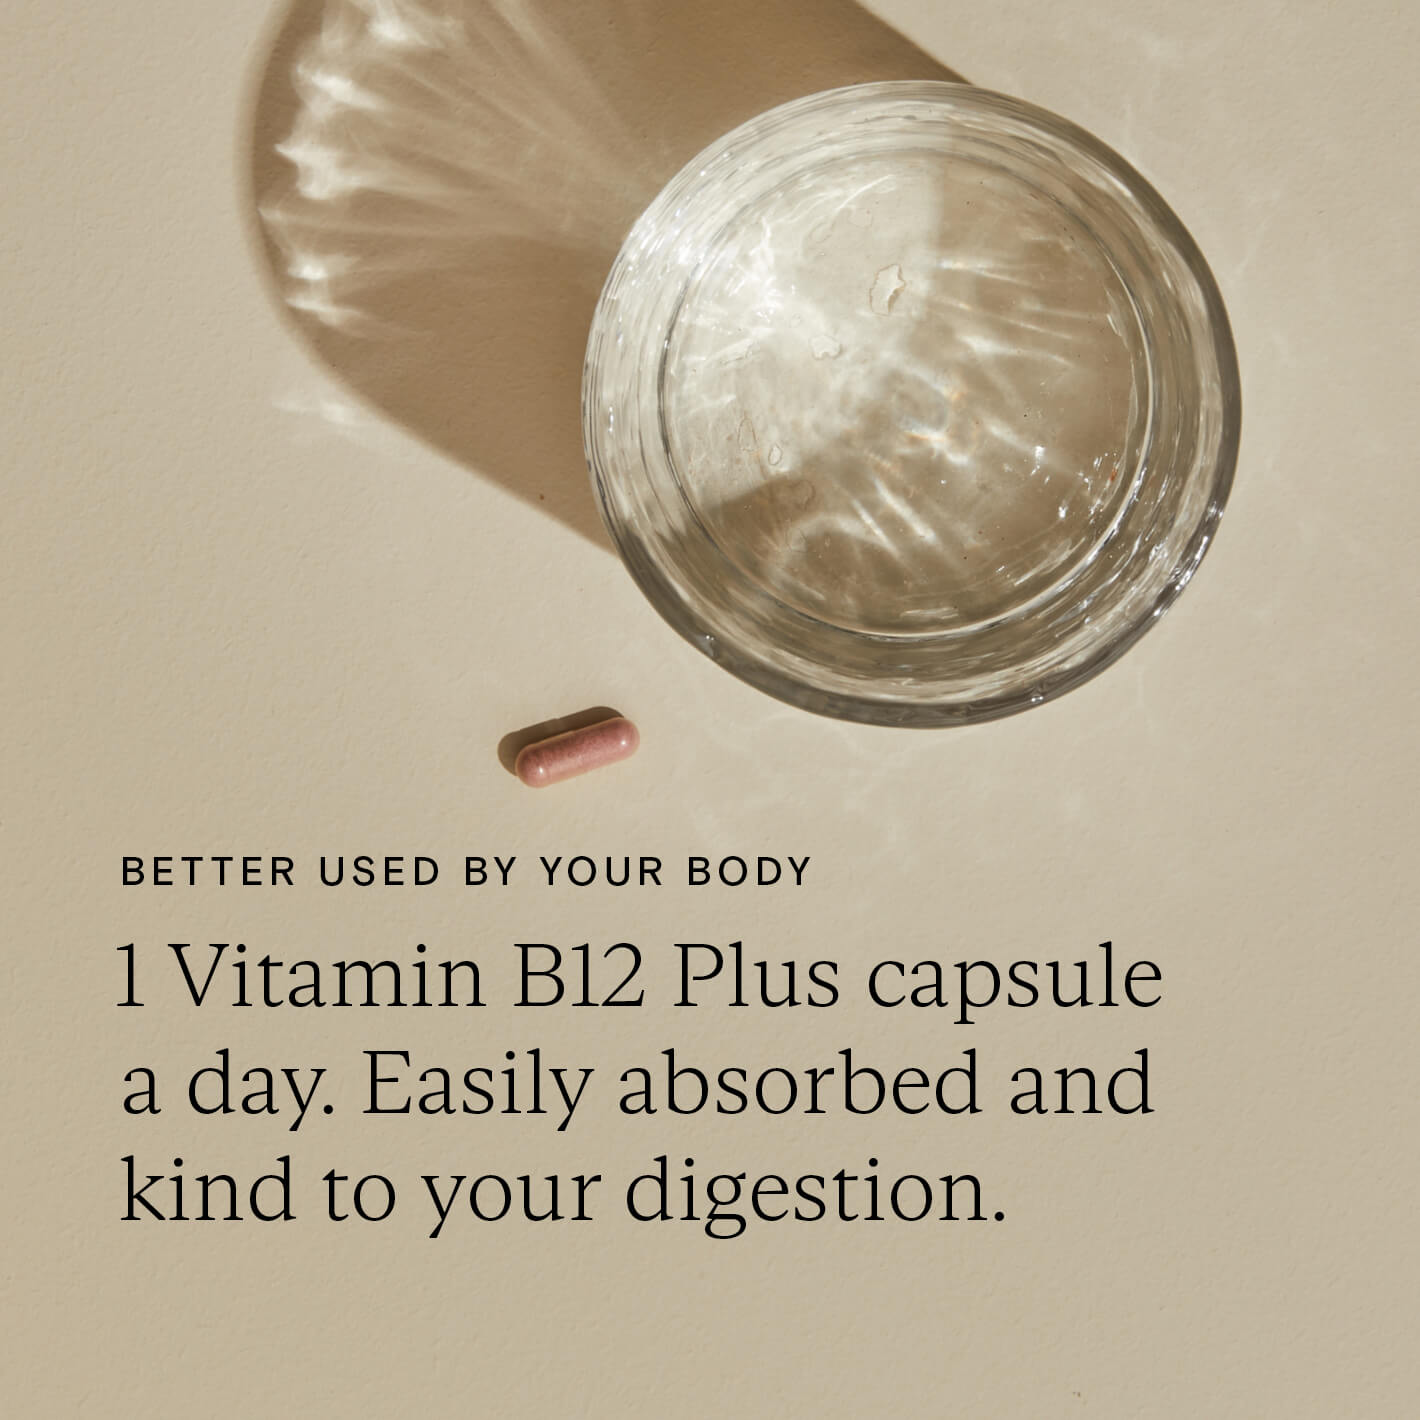 Food-Grown® Vitamin B12 Plus